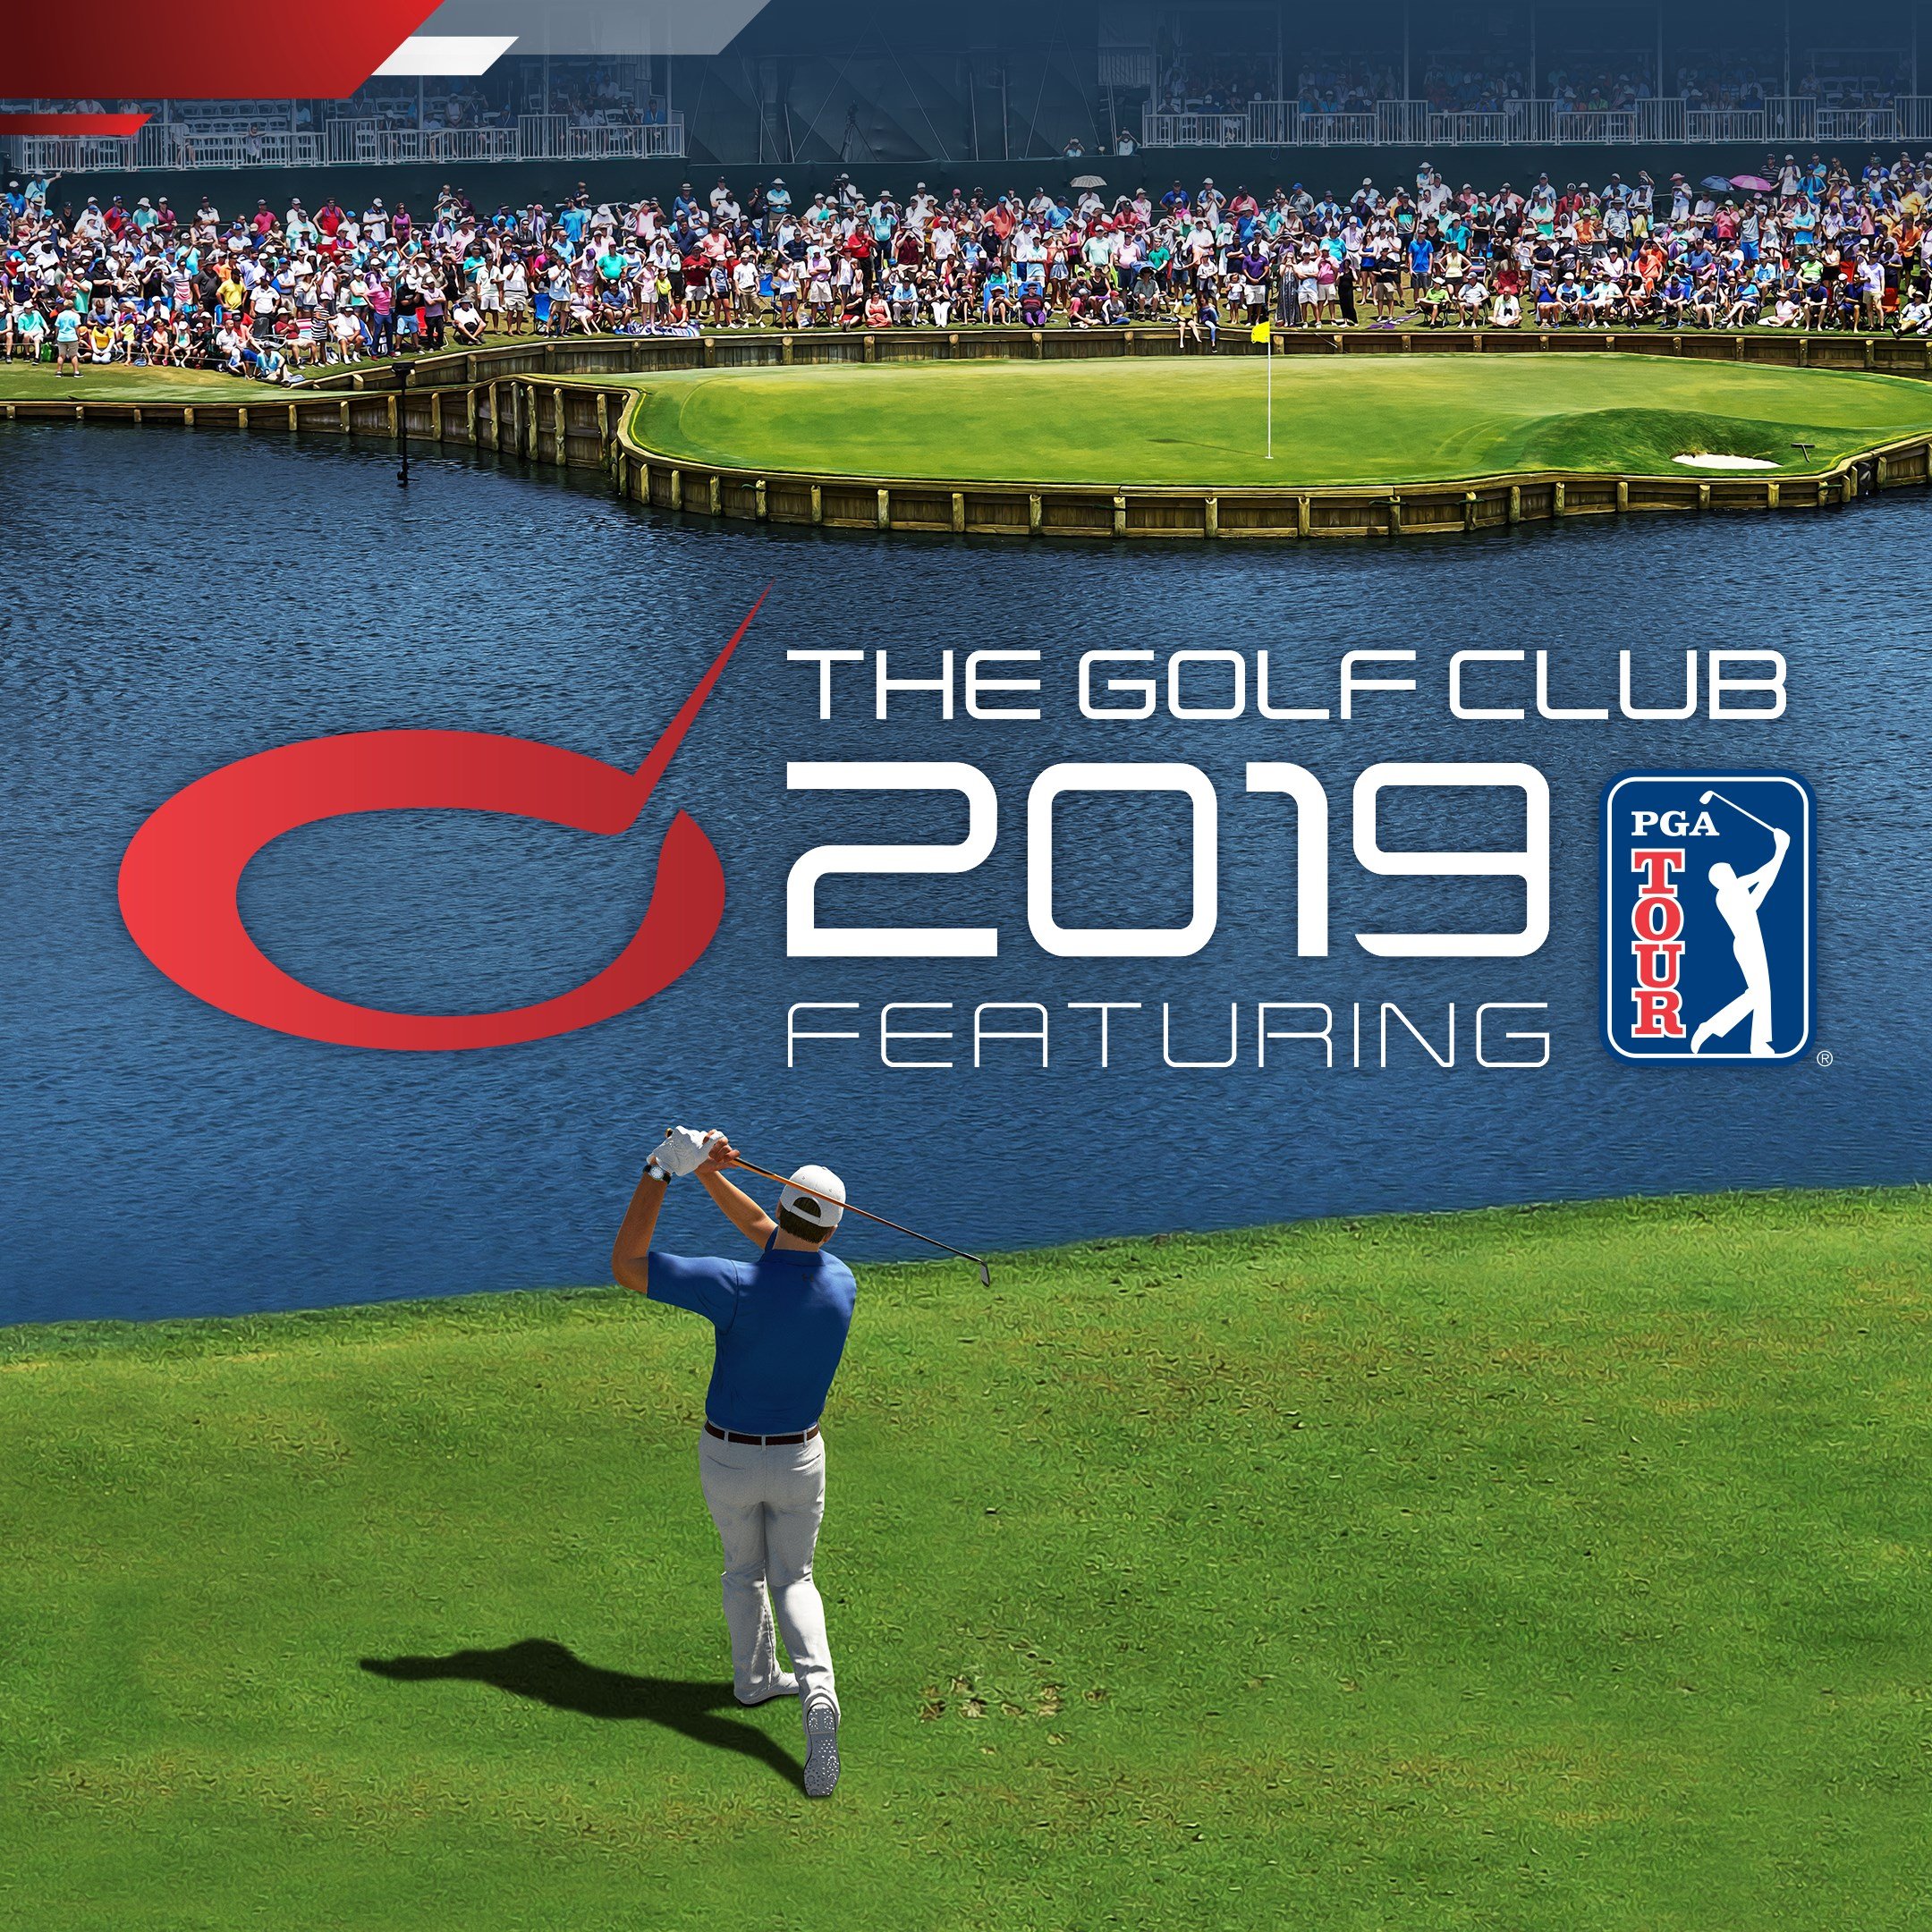 The Golf Club 2019 Featuring the PGA TOUR.